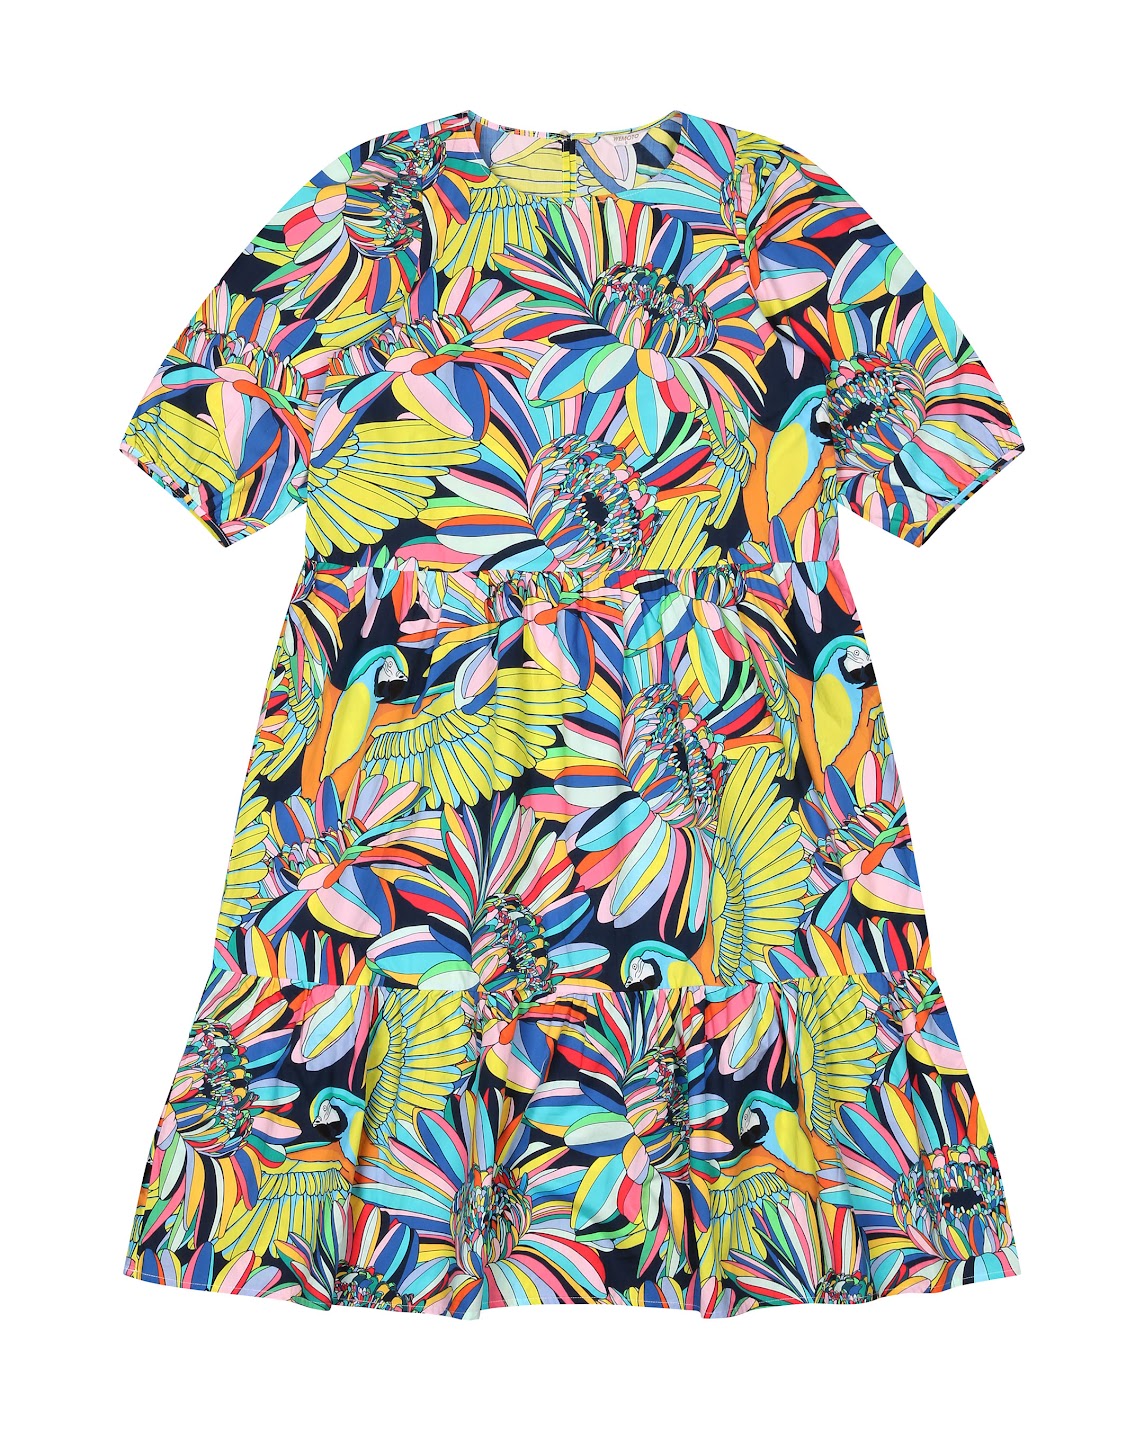 WEMOTO - Tilda Dress - Multicolor 5